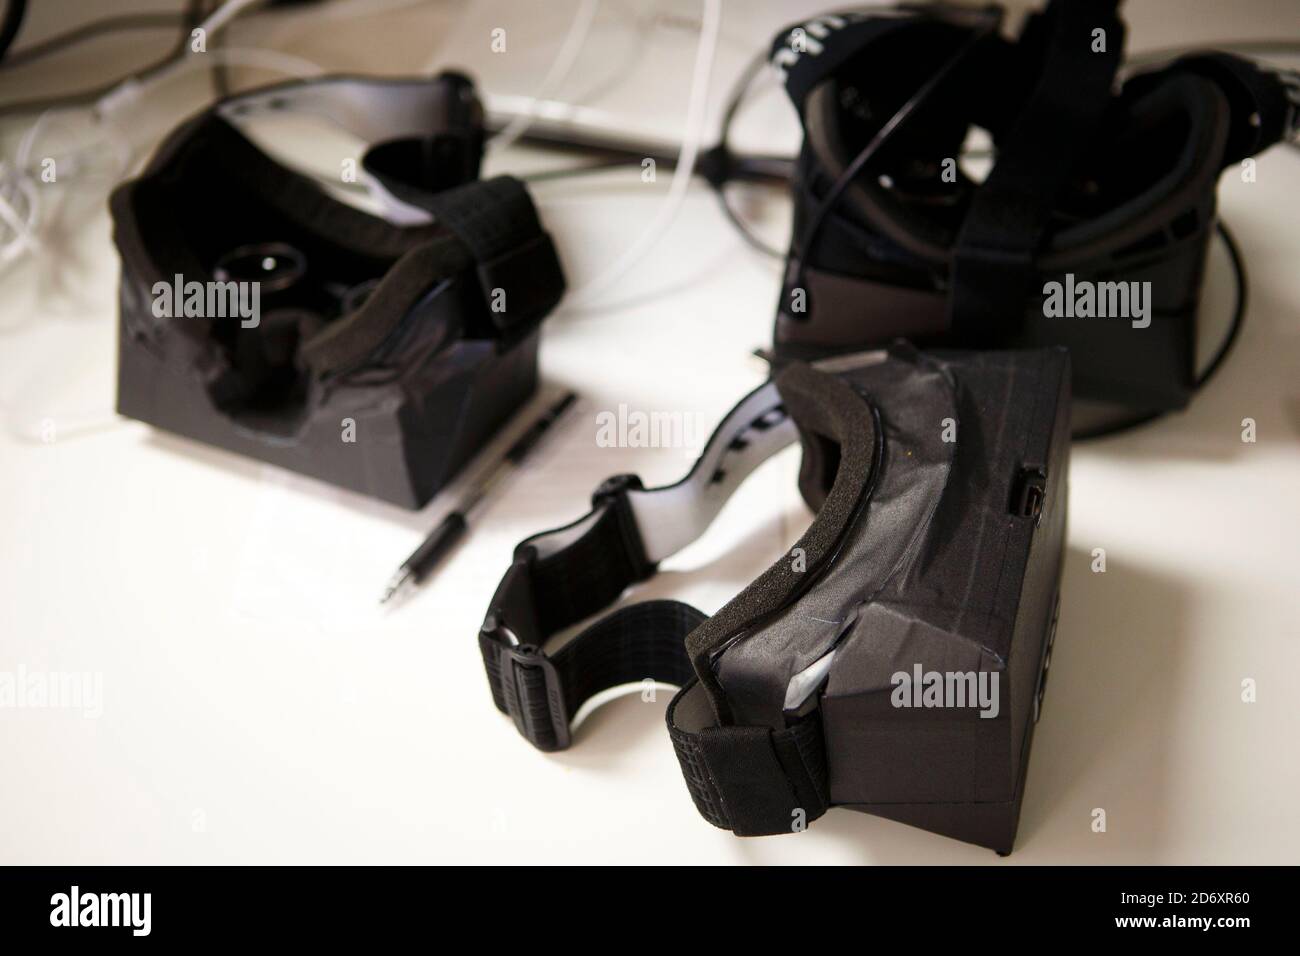 Irvine, California, USA. 6th Feb, 2013. Prototypes of the Oculus Rift virtual reality video game headset the Oculus company is developing in Irvine, California on Wednesday, February 6, 2013. © 2013 Patrick T. Fallon Credit: Patrick Fallon/ZUMA Wire/Alamy Live News Stock Photo